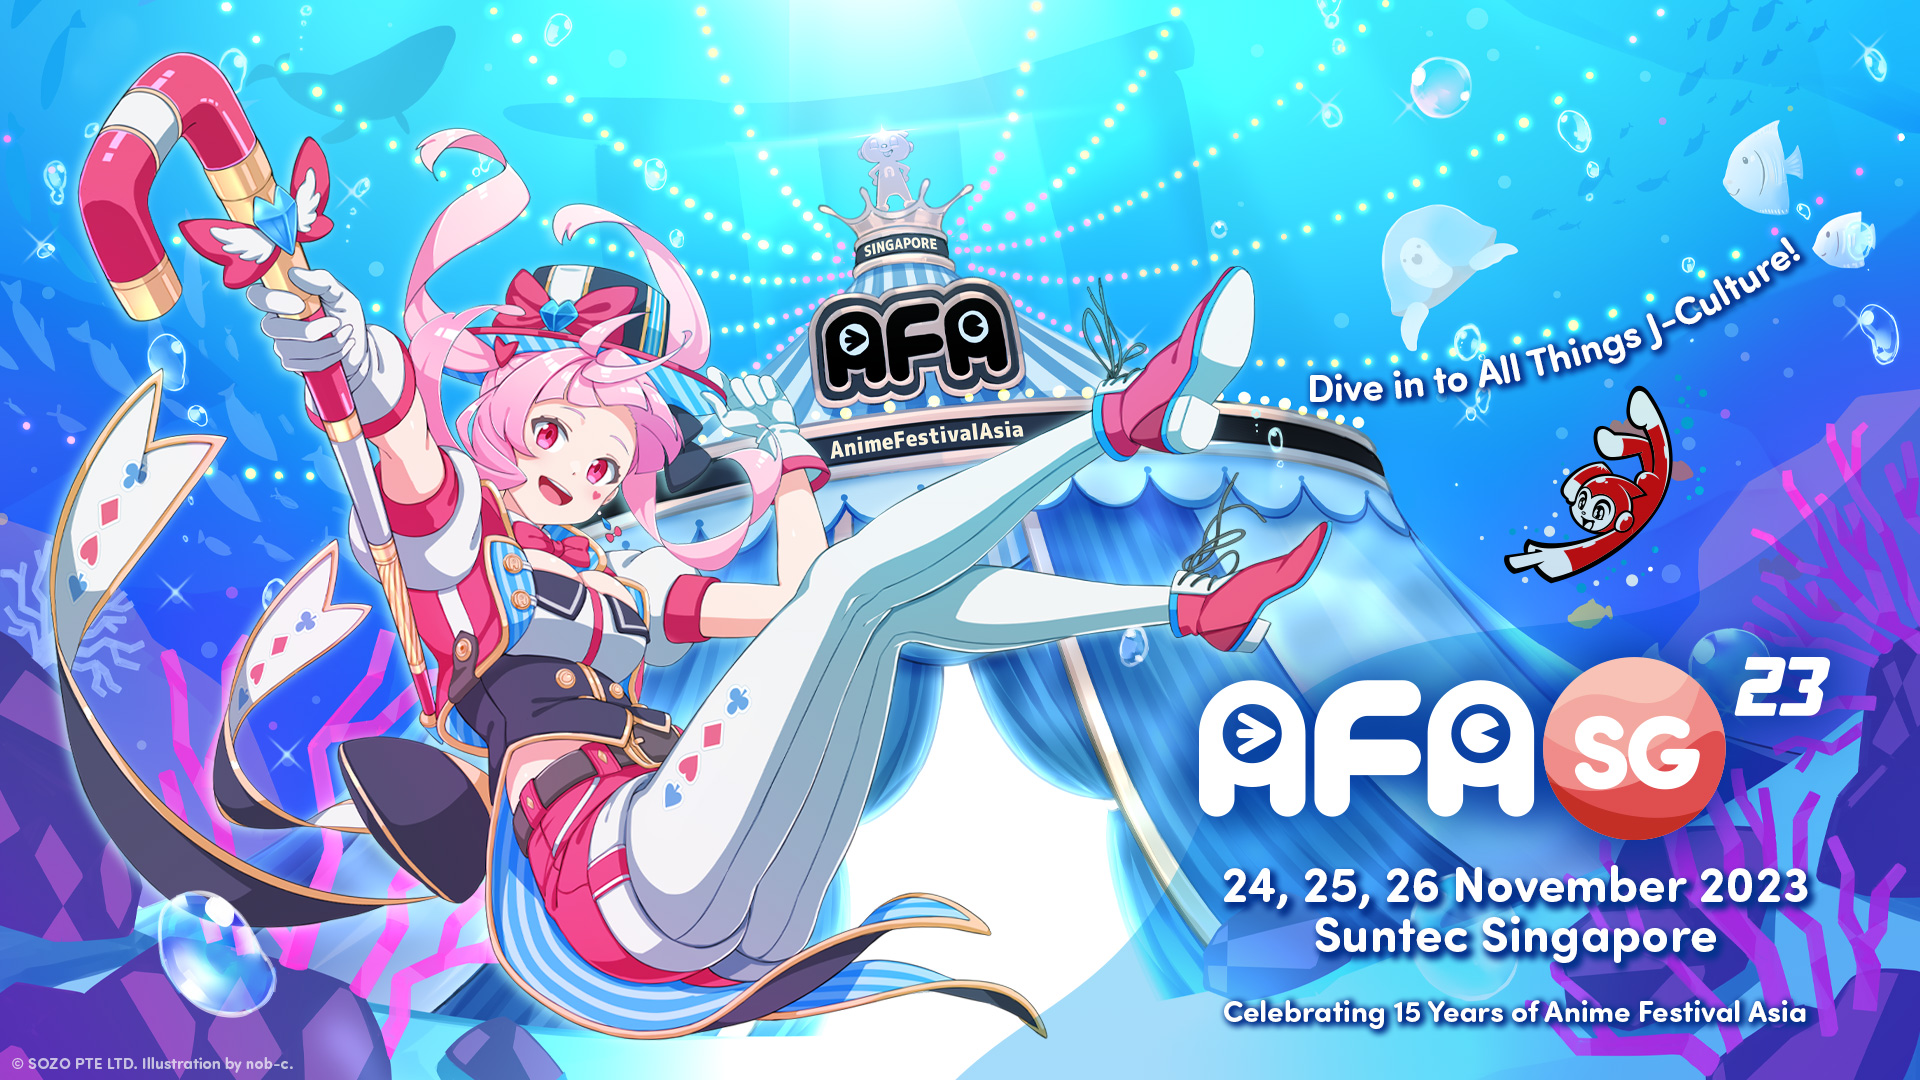 Anime festival Asia 2014 Singapore | International Events | Good Smile  Company Event Information